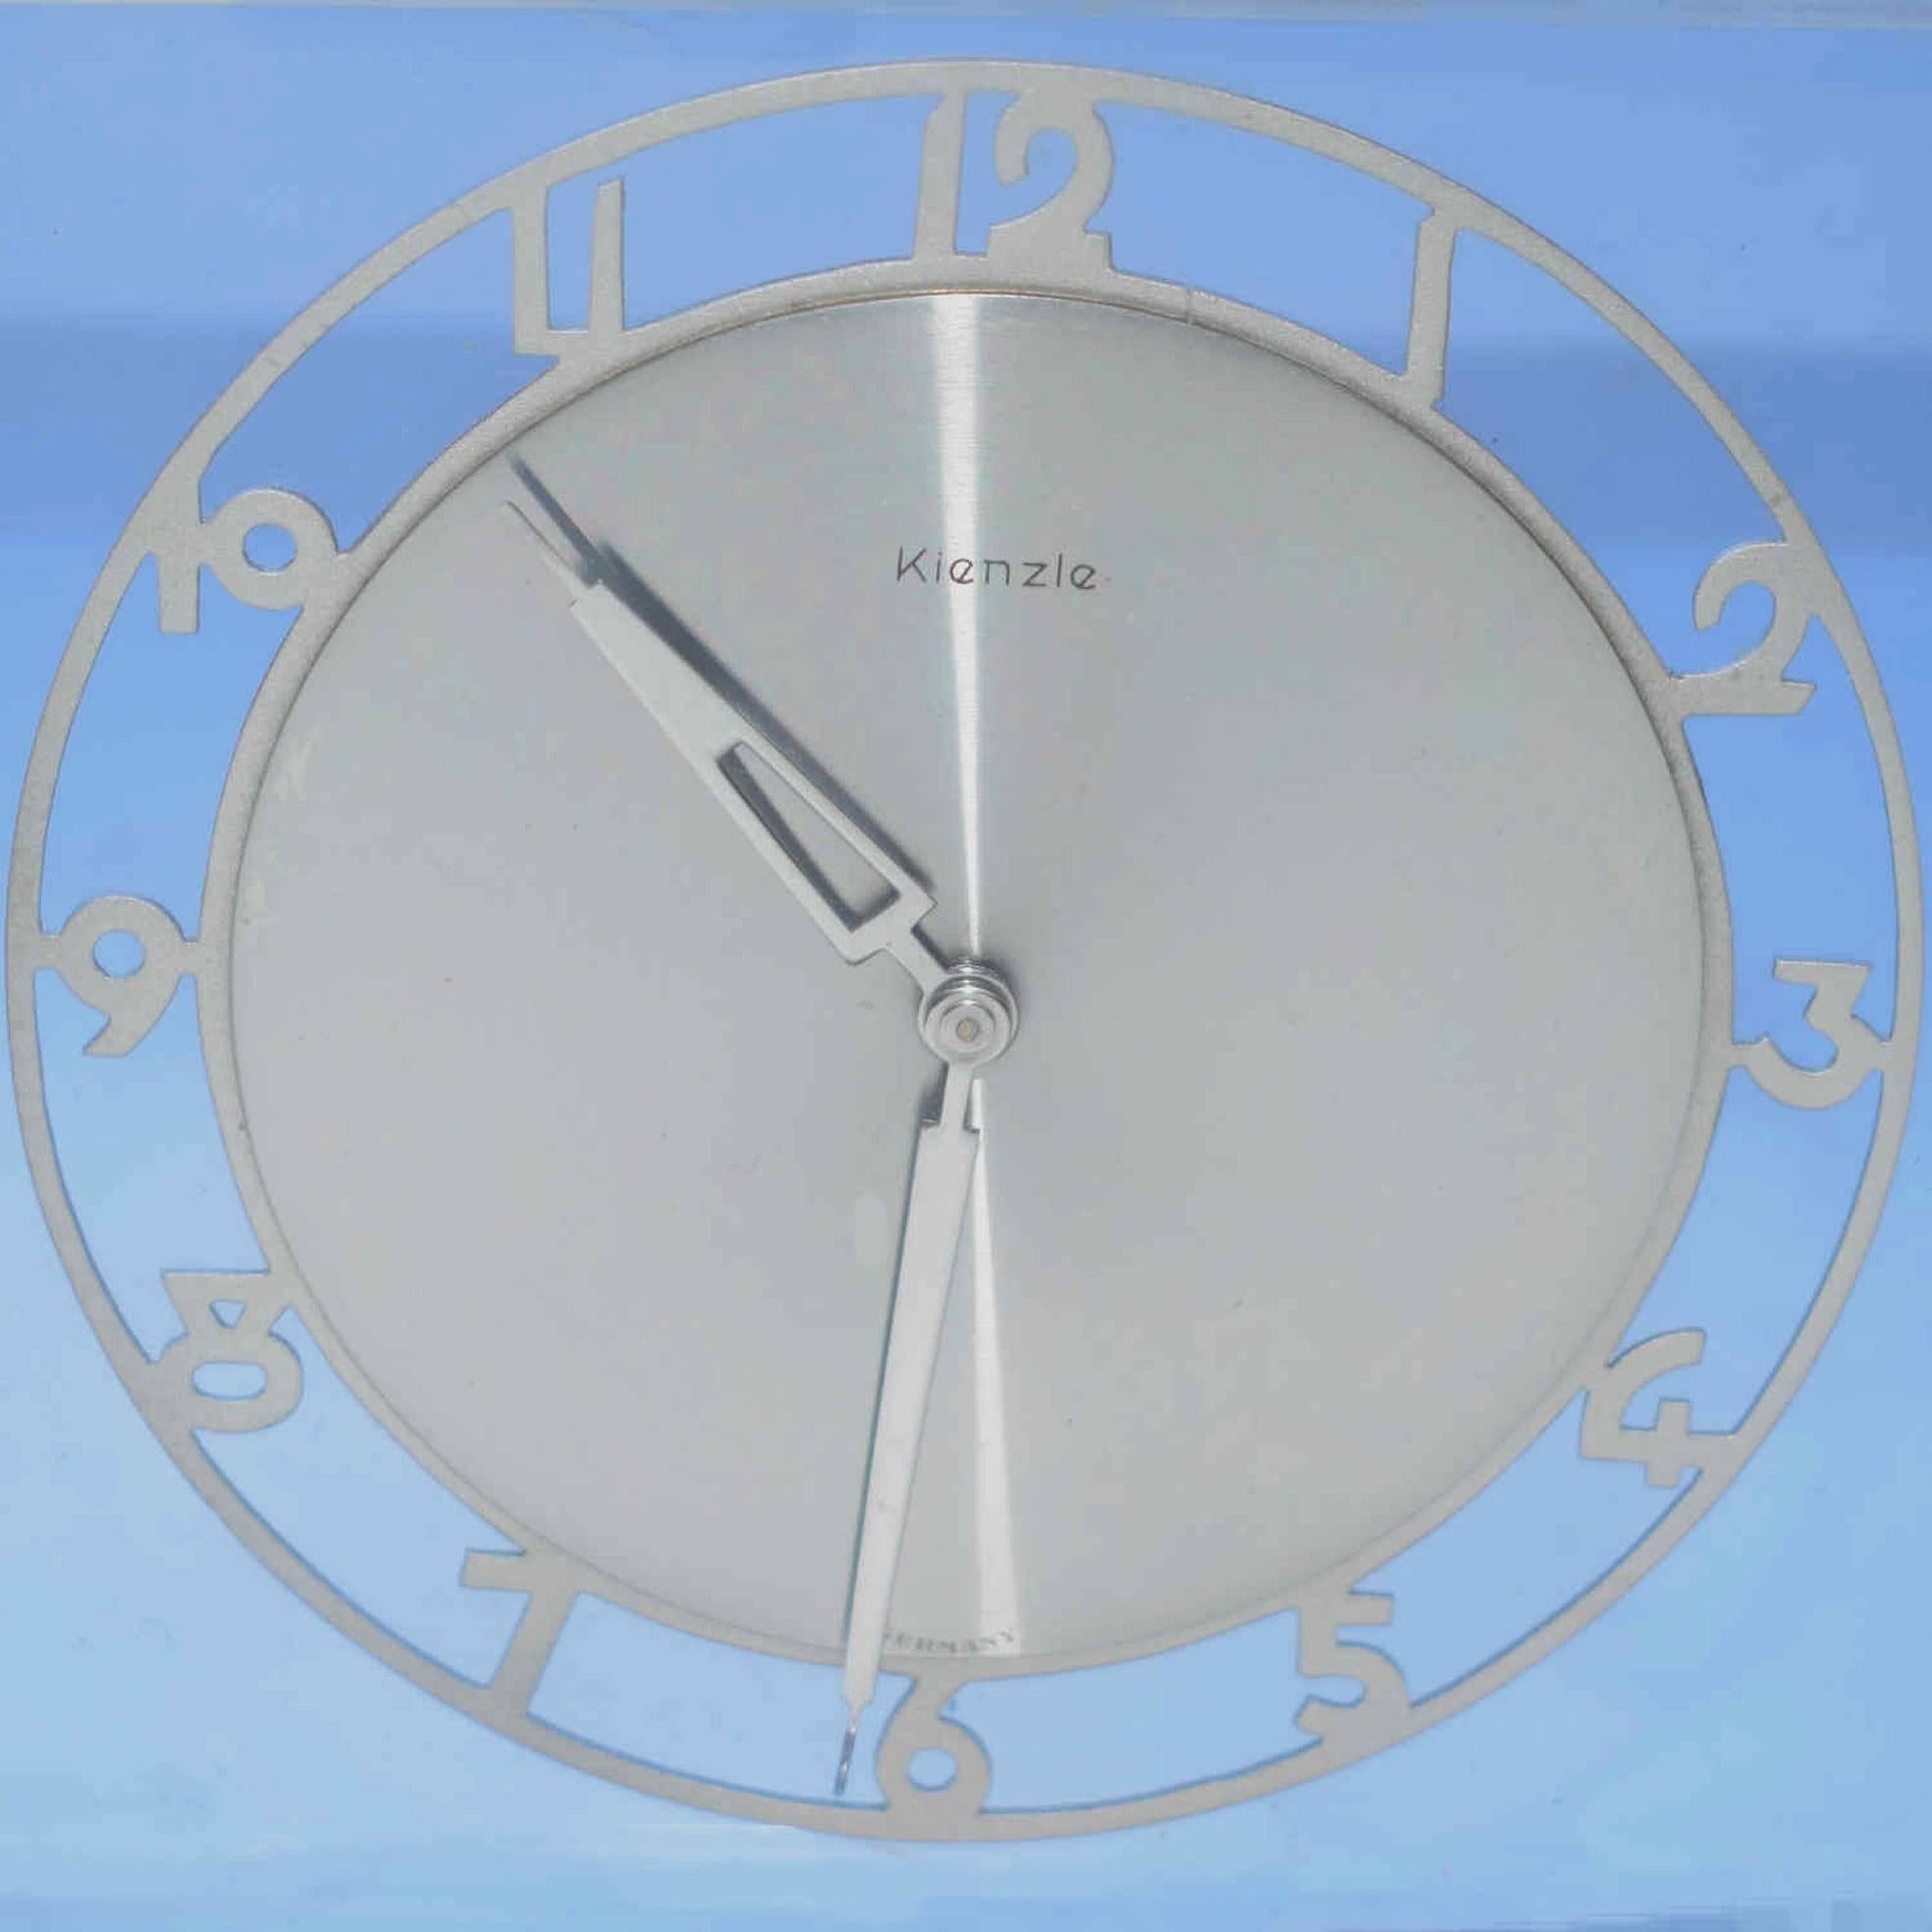 20th Century Art Deco Glass Clock by Kienzle, circa 1930